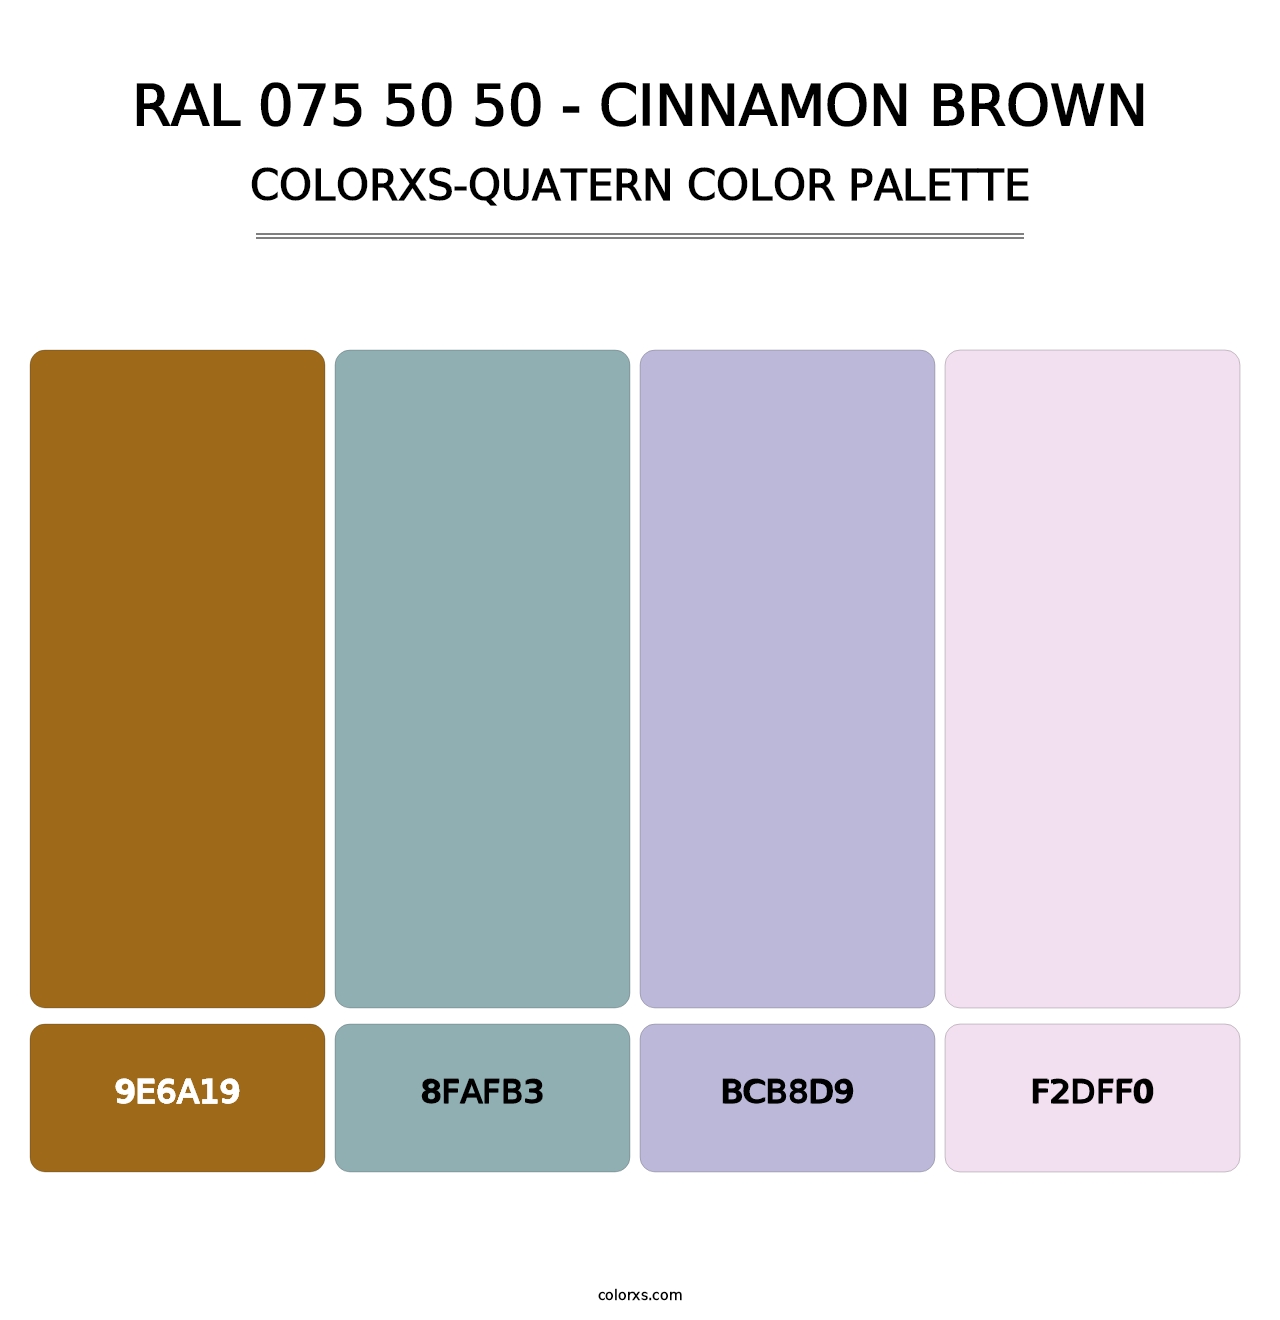 RAL 075 50 50 - Cinnamon Brown - Colorxs Quatern Palette